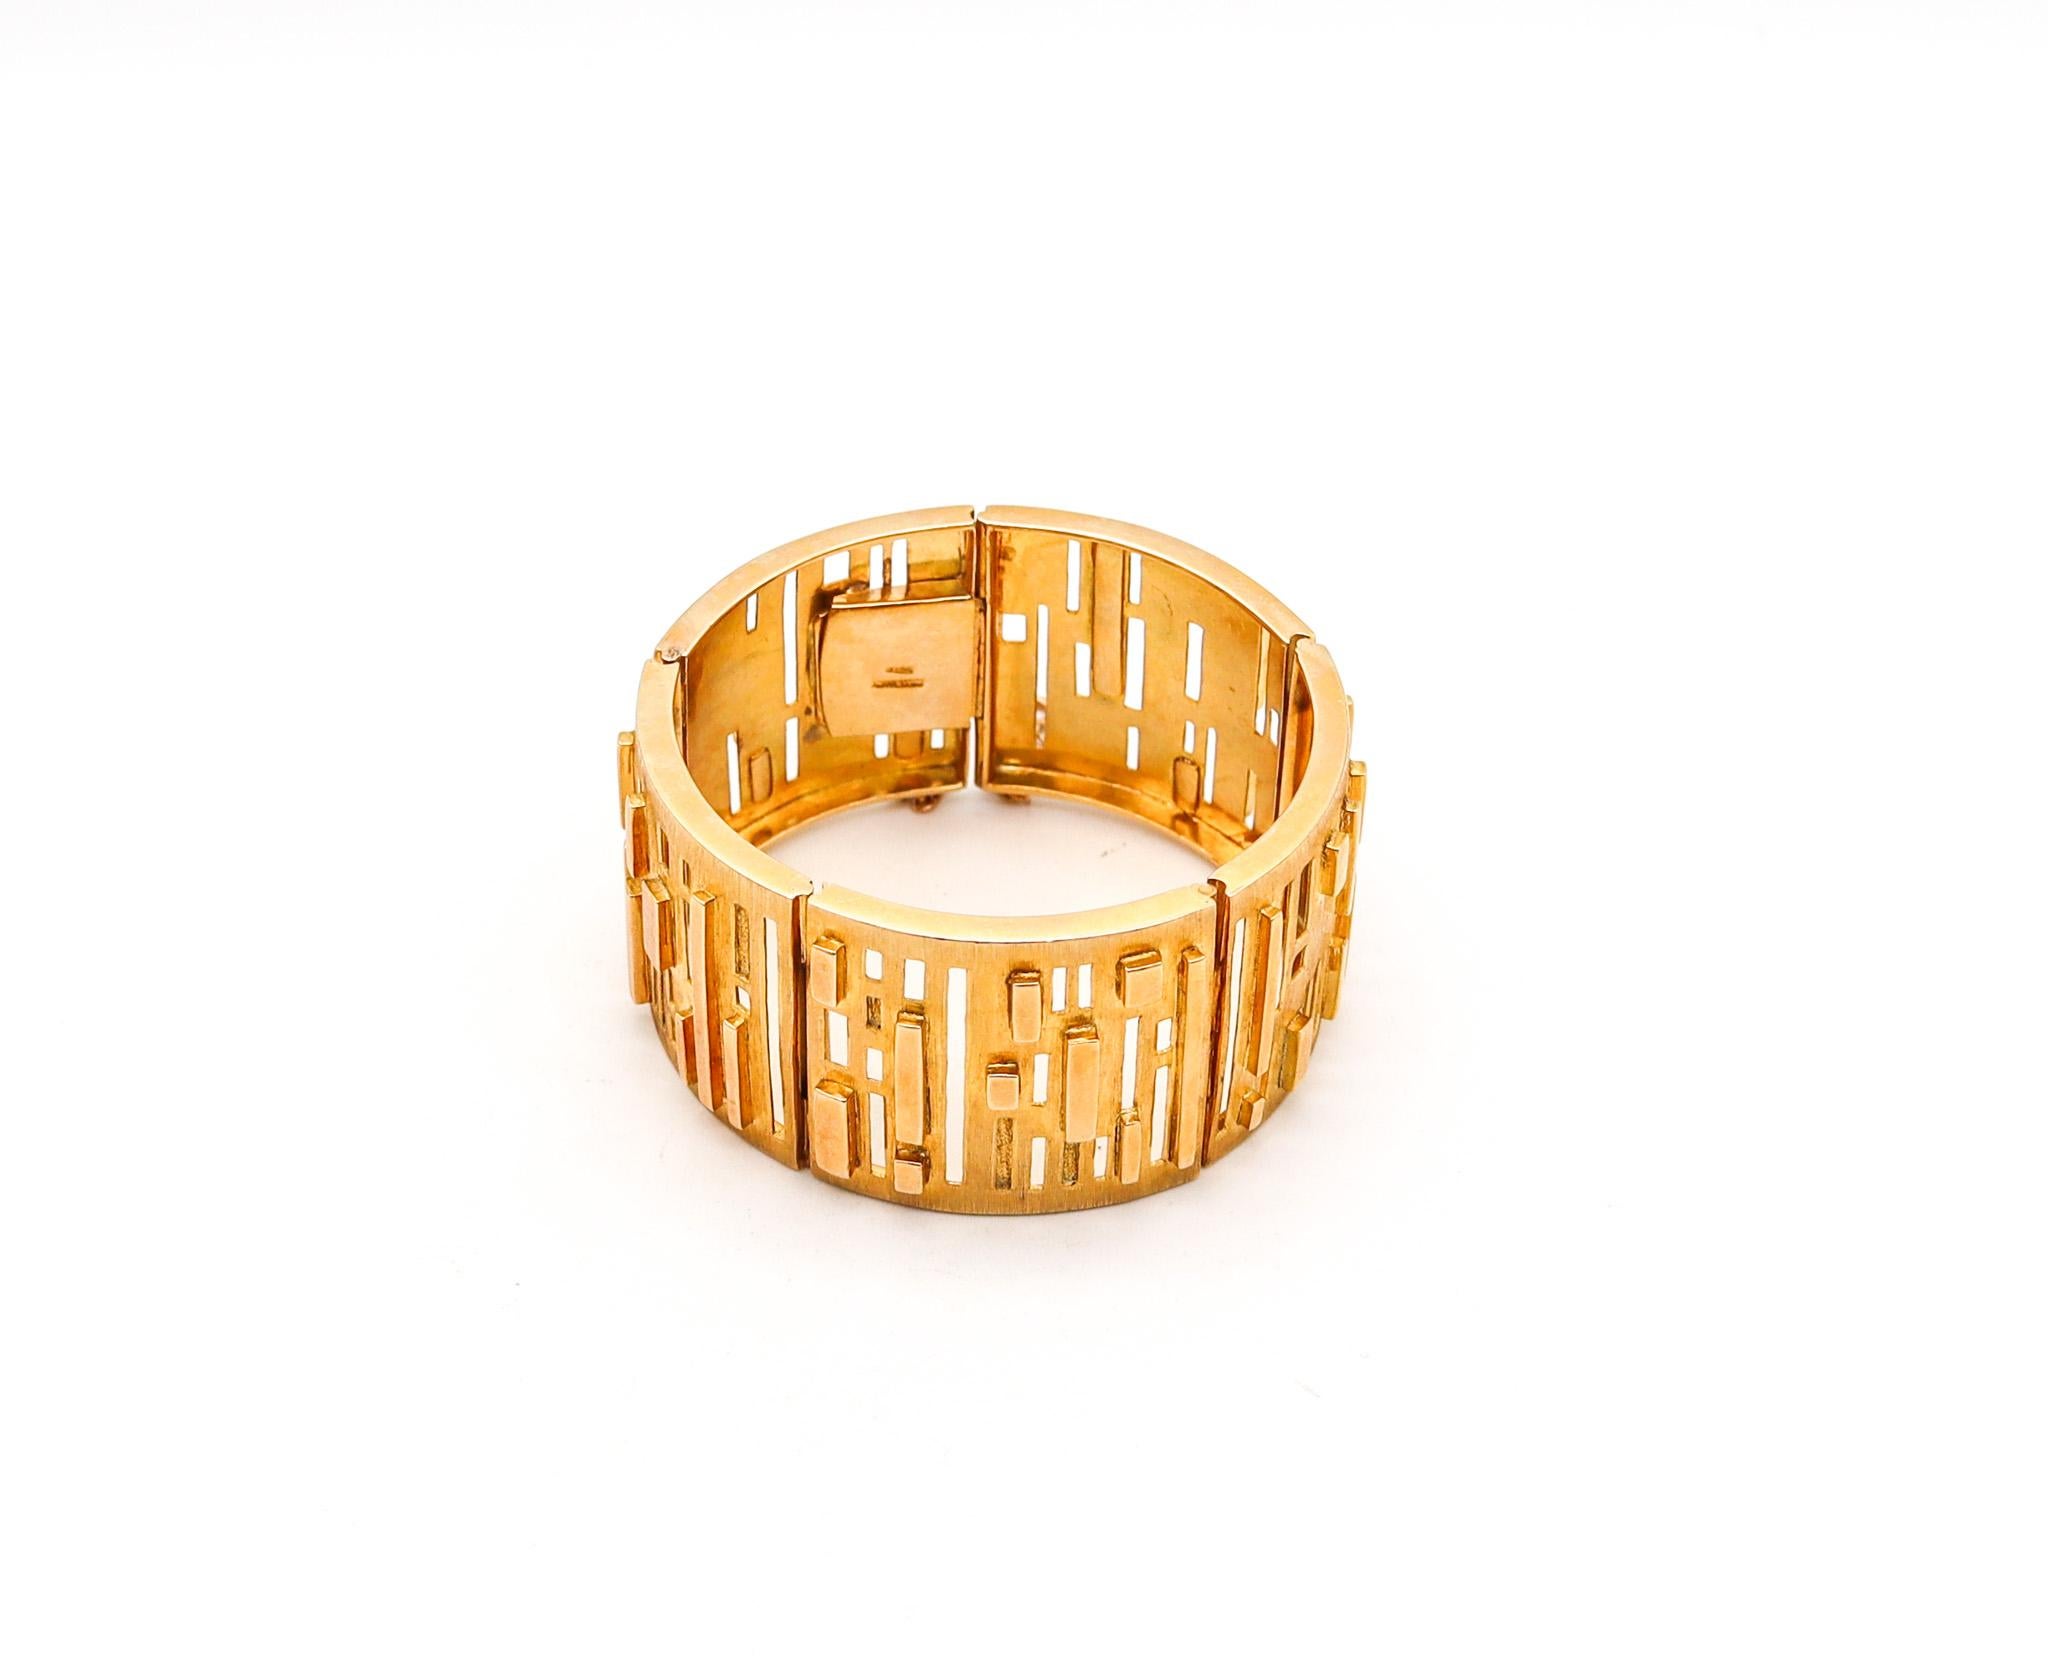 Modernist Burle Marx 1970 Geometric Concretism Art Bracelet In Solid 18Kt Yellow Gold